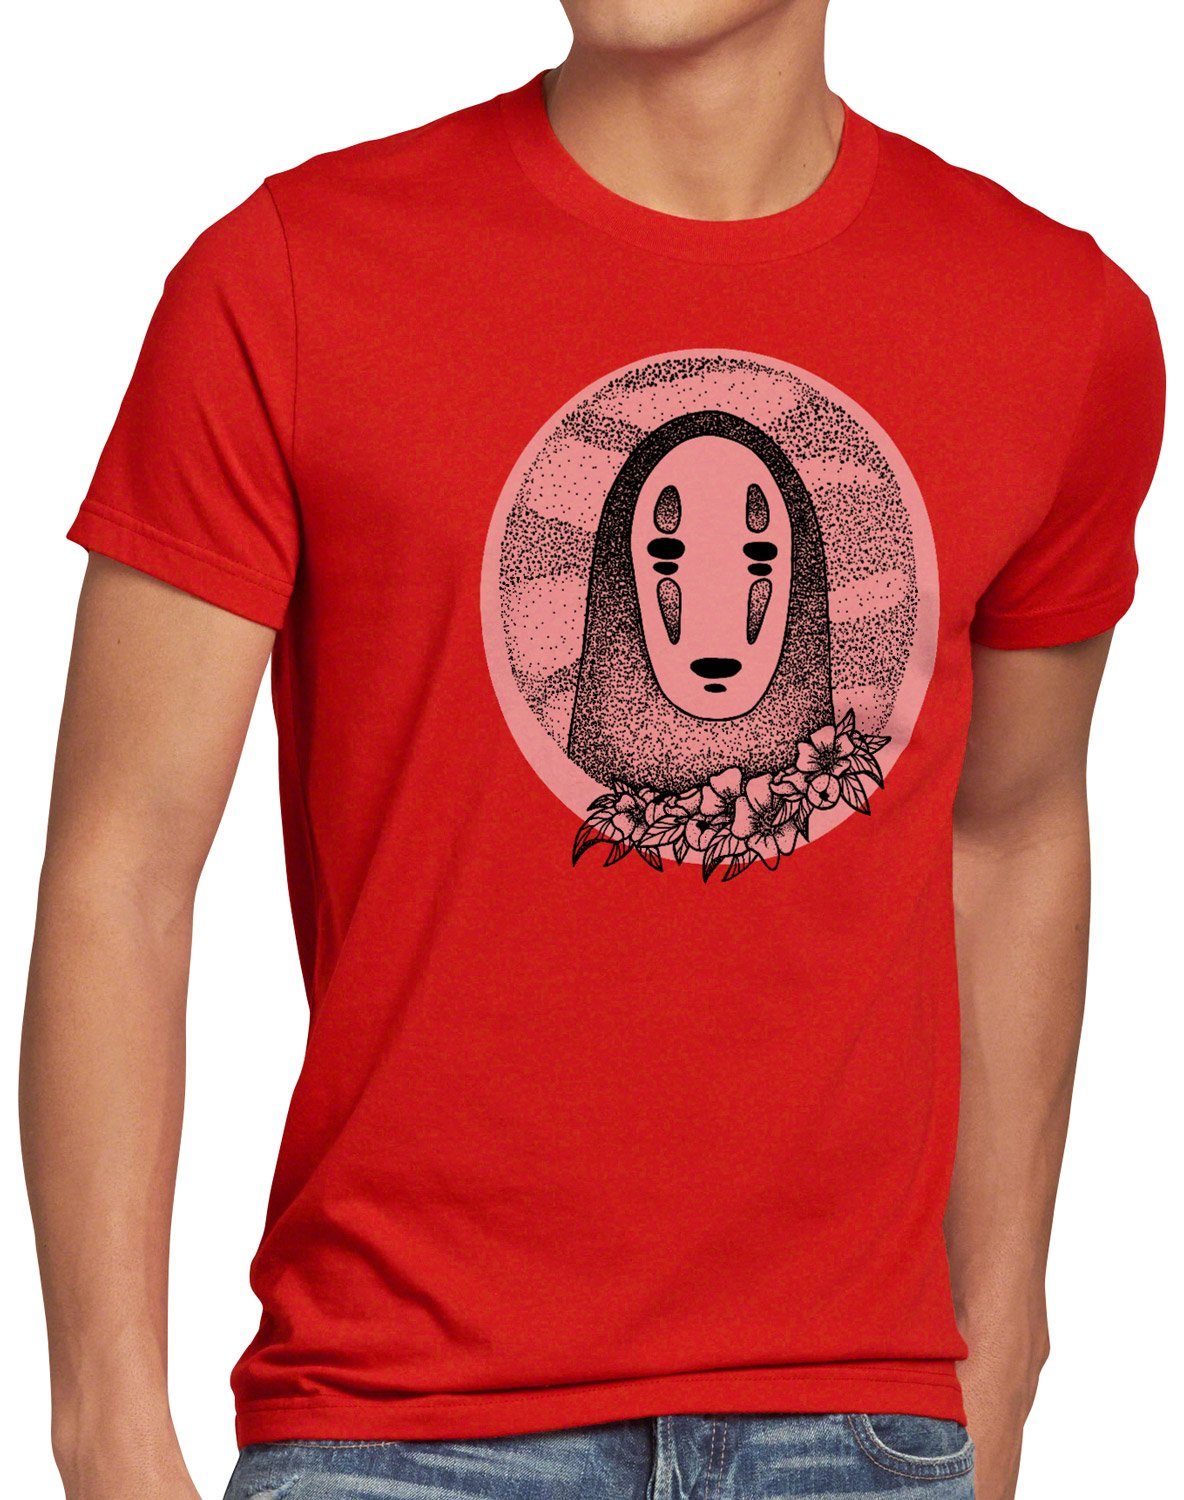 Neue Produkte günstig im Versandhandel bestellen style3 Print-Shirt manga Dot Ohngesicht rot zauberland anime chihiro reise no-face T-Shirt Herren